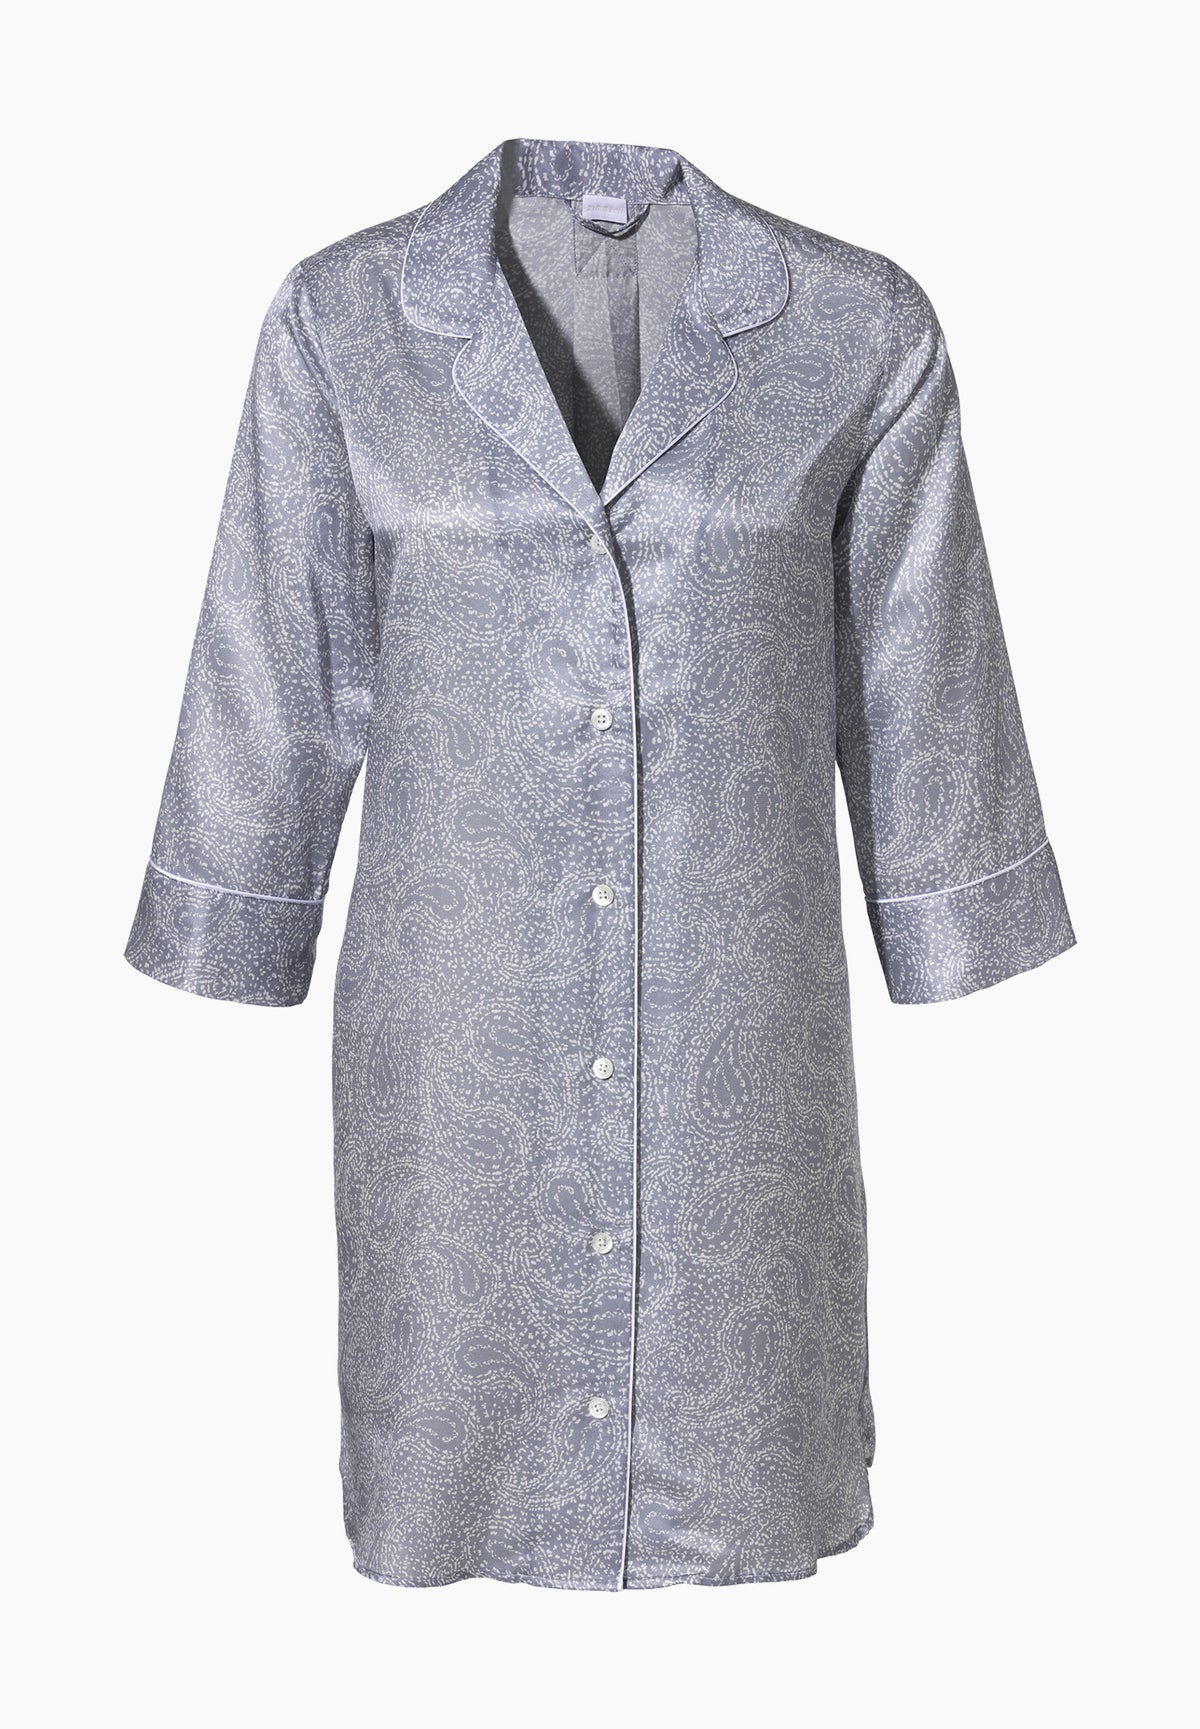 Cotton/Silk Print | Tee-shirt de nuit long manches 3/4 - paisley blue